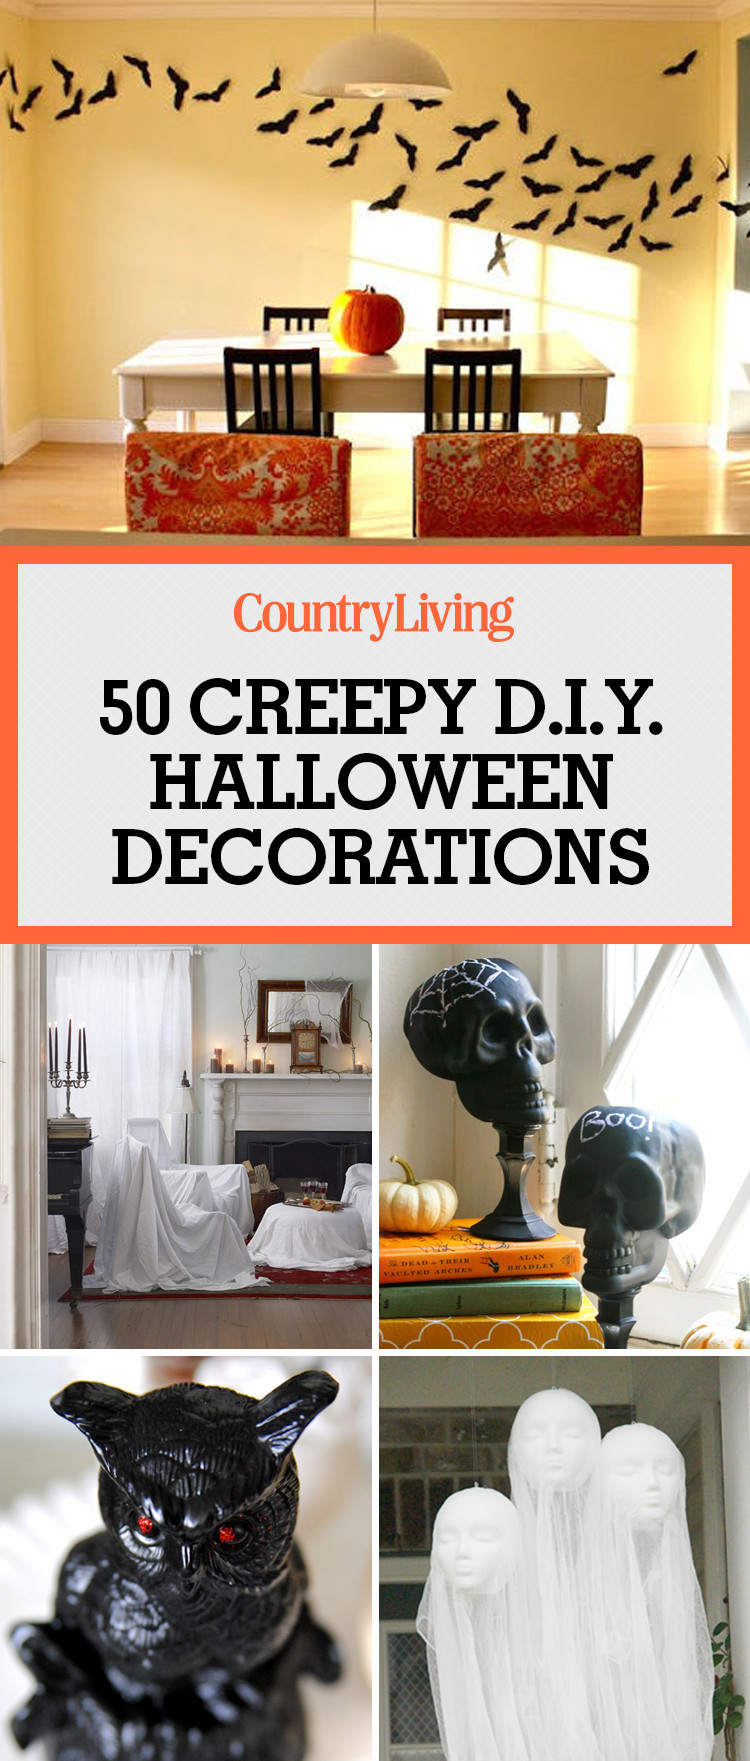 Best ideas about Halloween Decoration Ideas DIY
. Save or Pin 40 Easy DIY Halloween Decorations Homemade Do It Now.